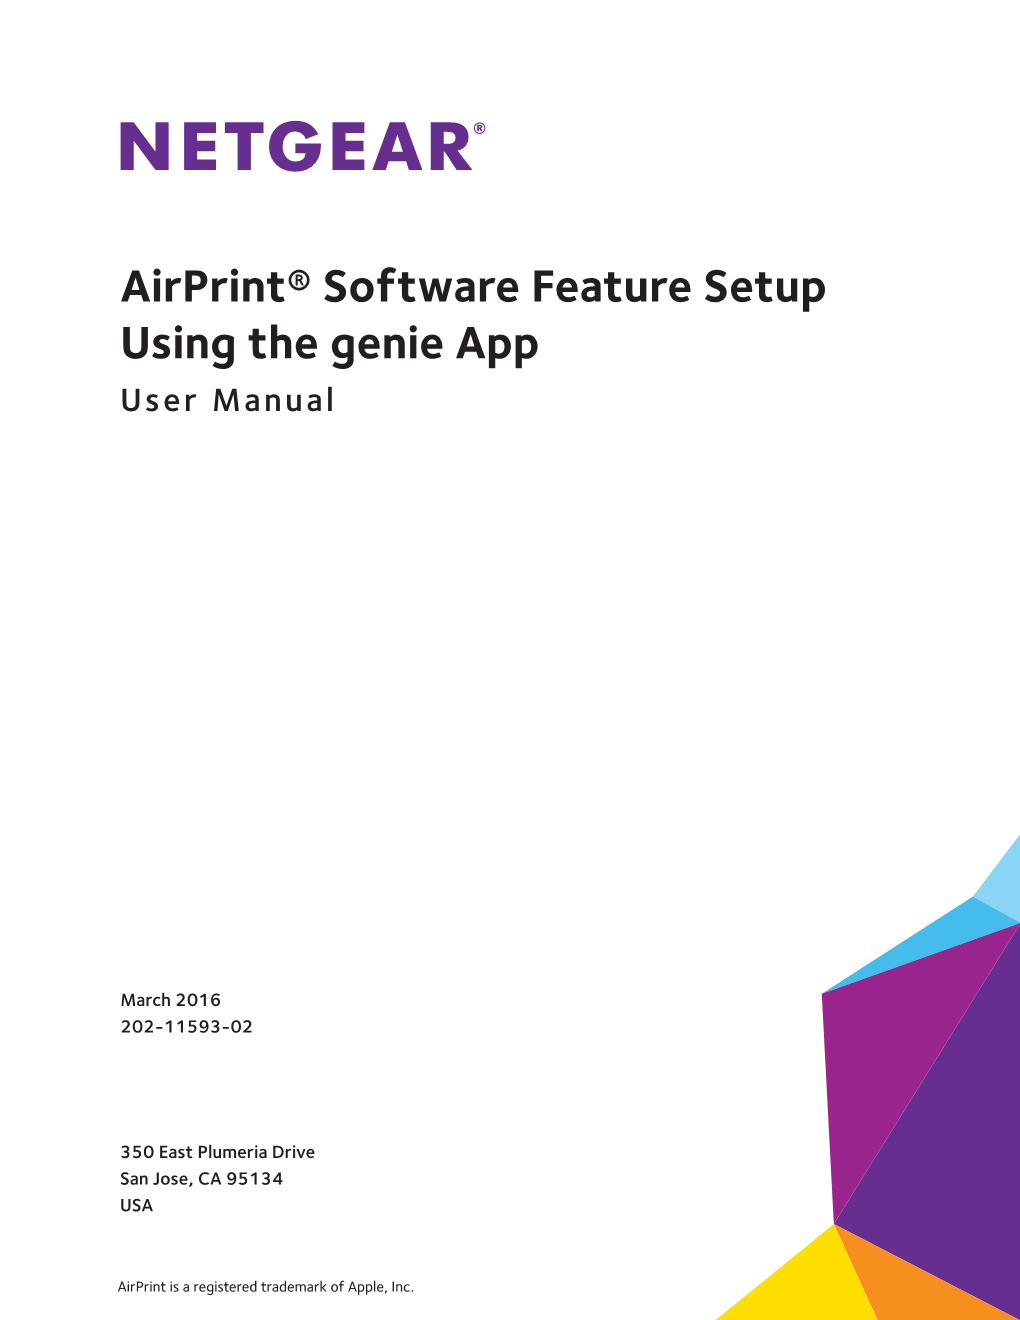 NETGEAR Airprint Setup Using the Genie App User Manual